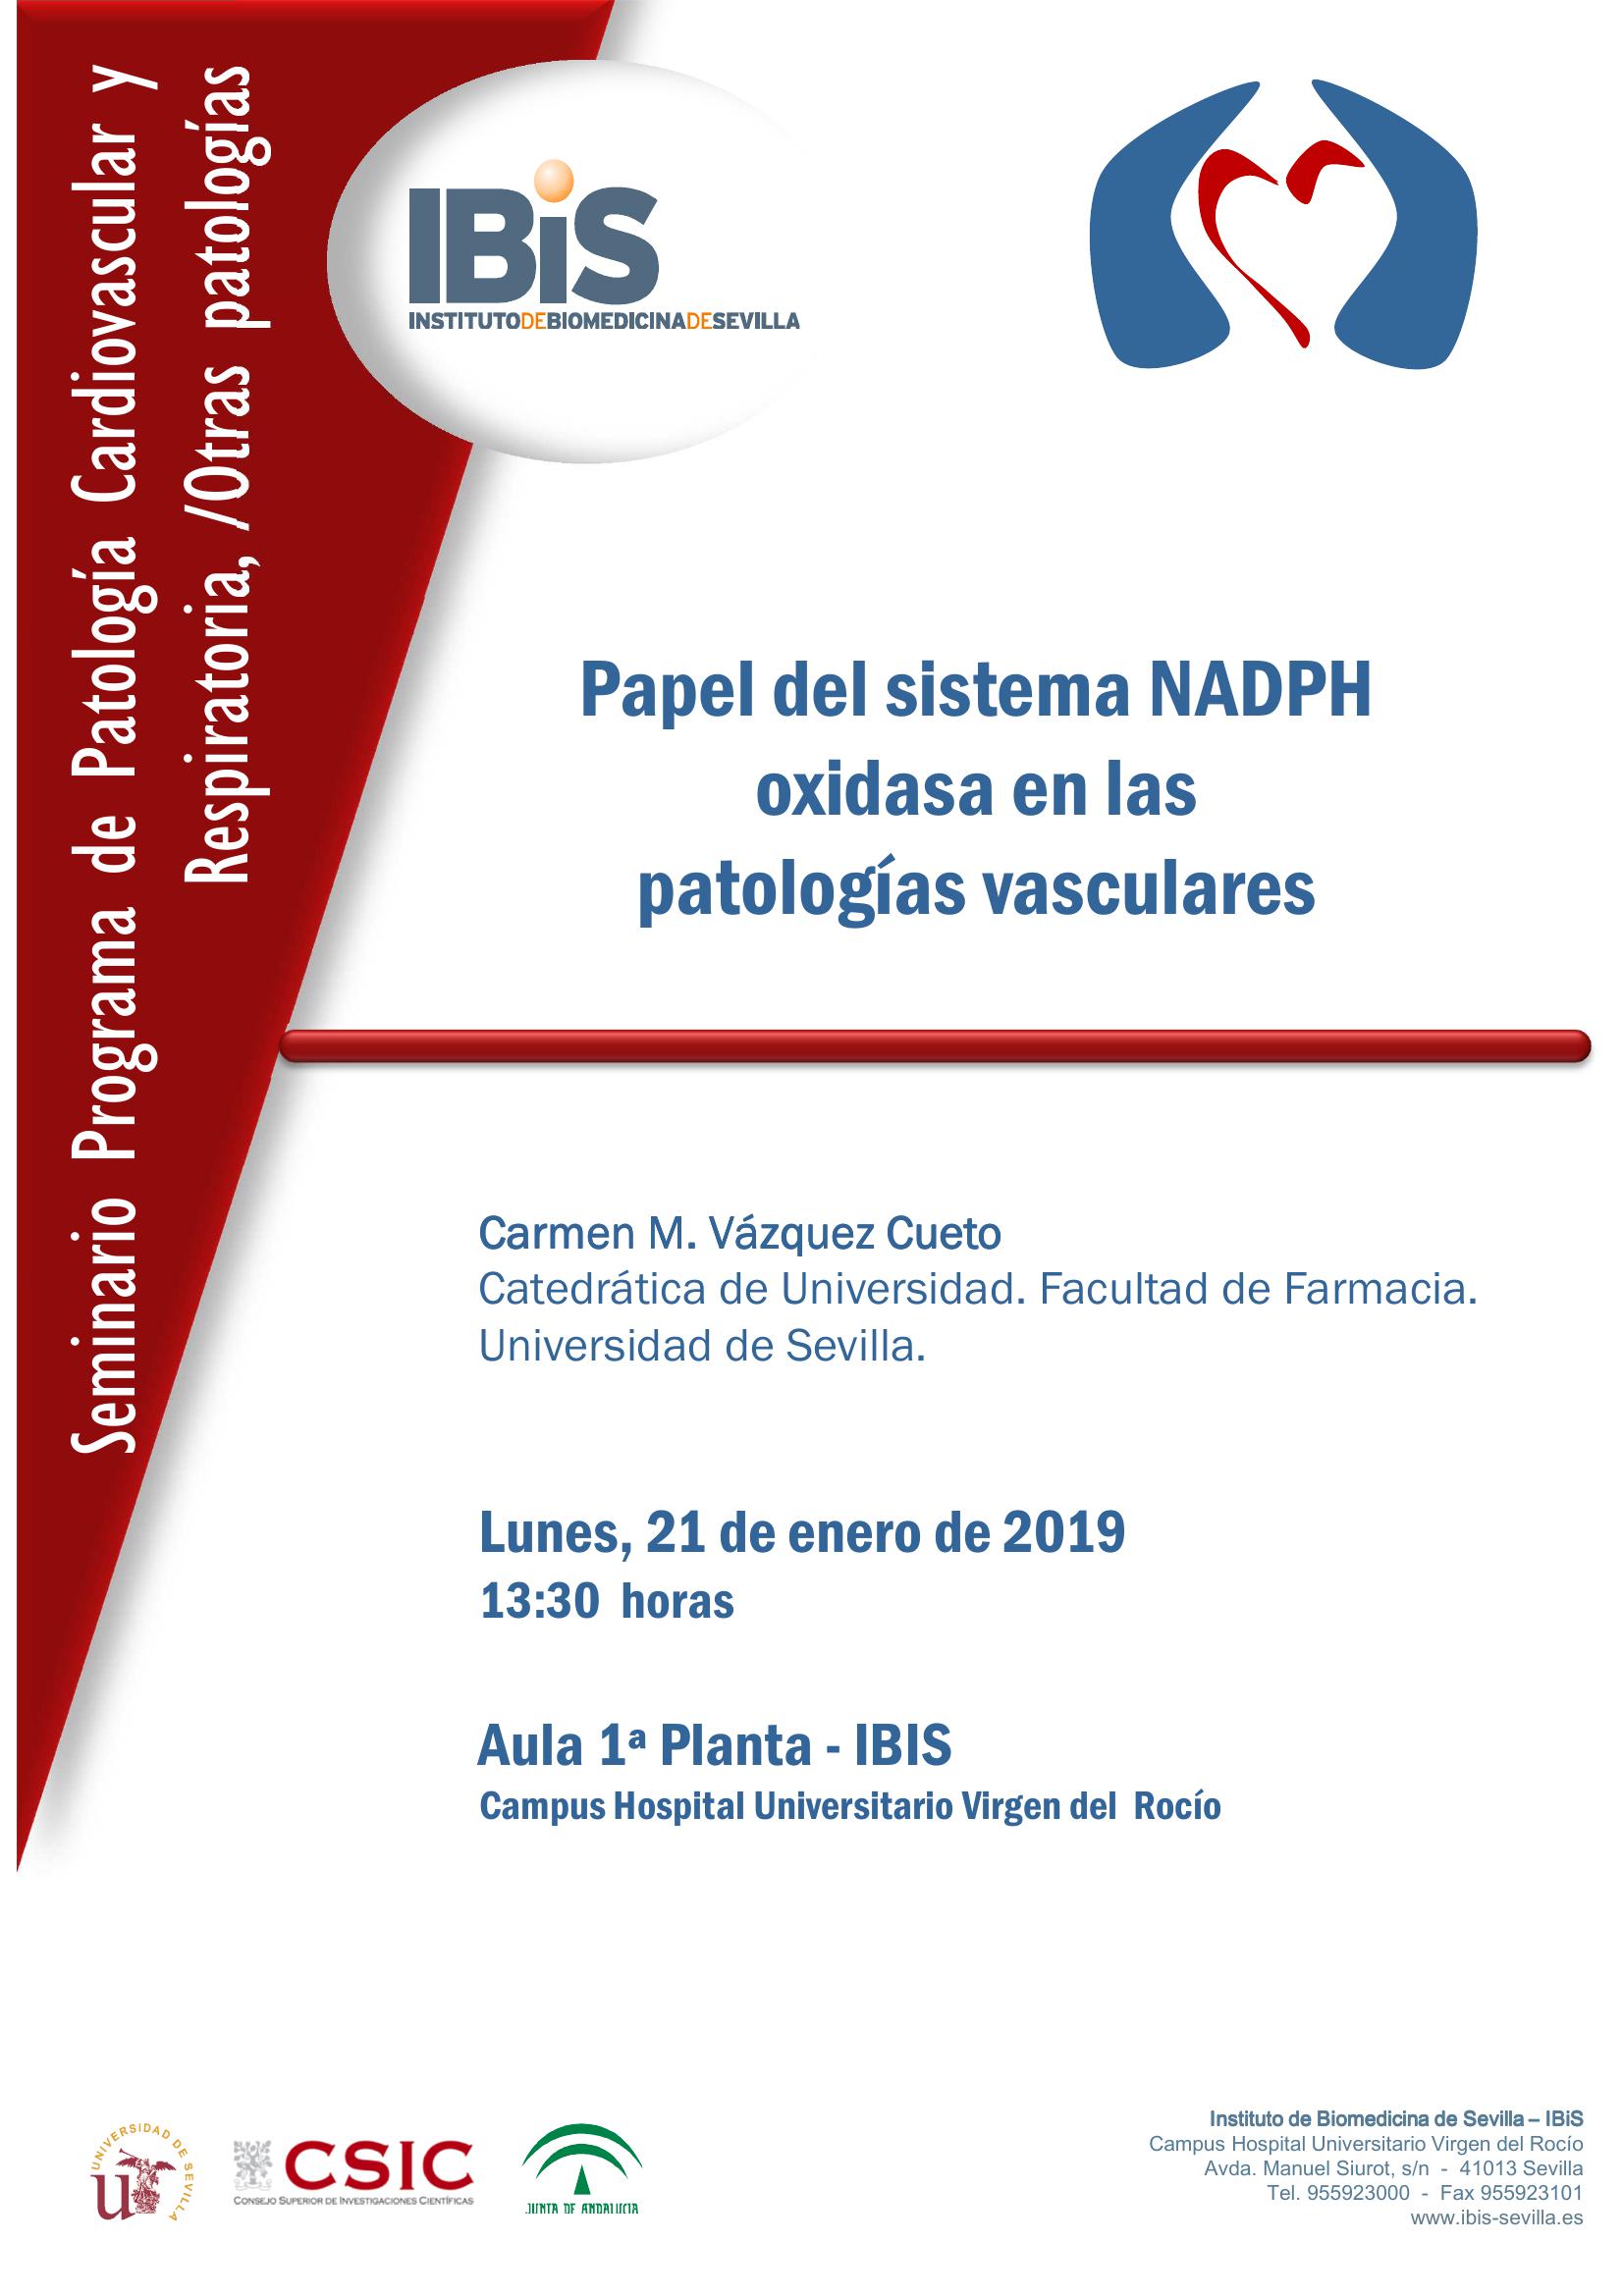 Poster: Papel del sistema NADPH oxidasa en las  patologías vasculares